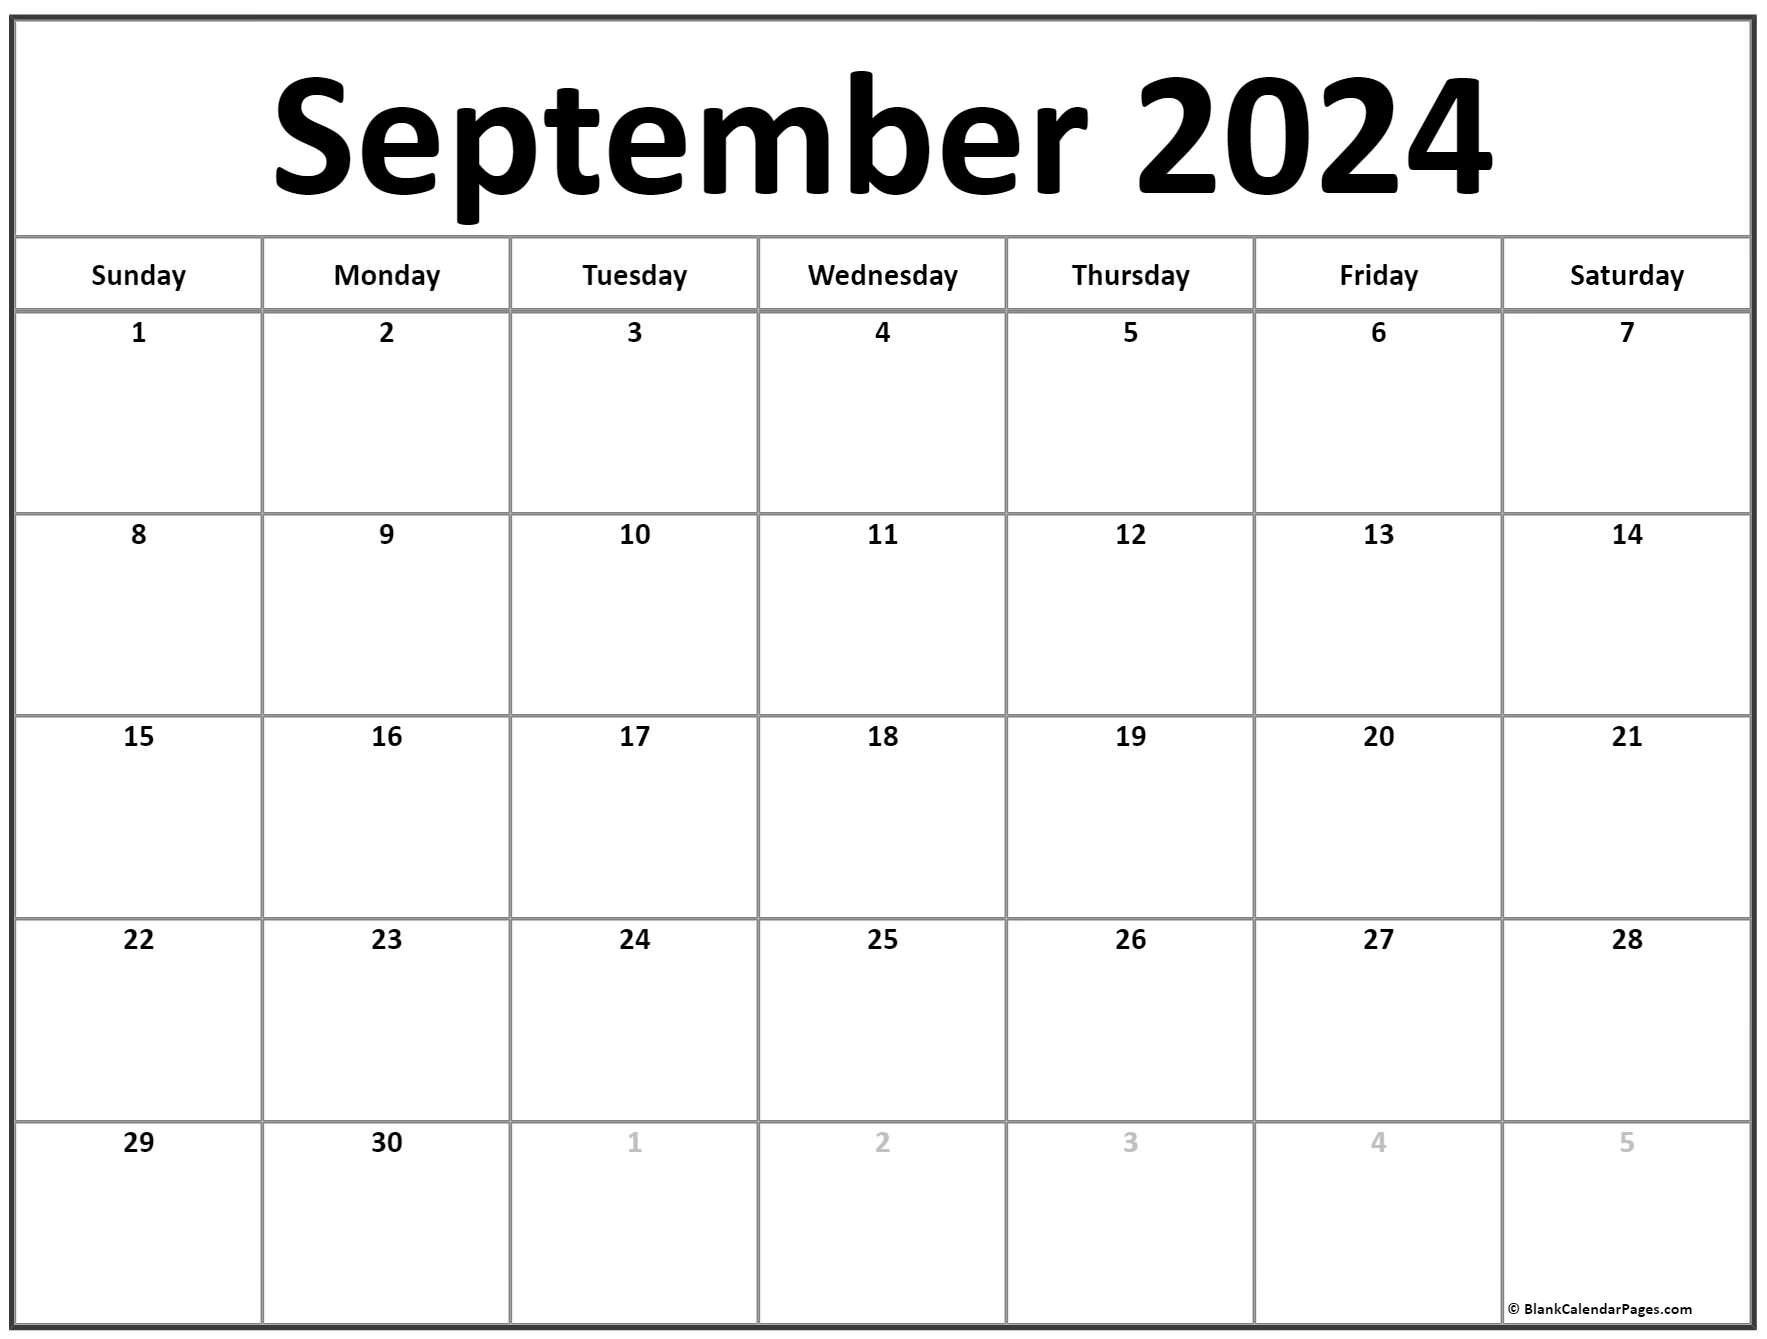 September 2022 calendar free printable calendar